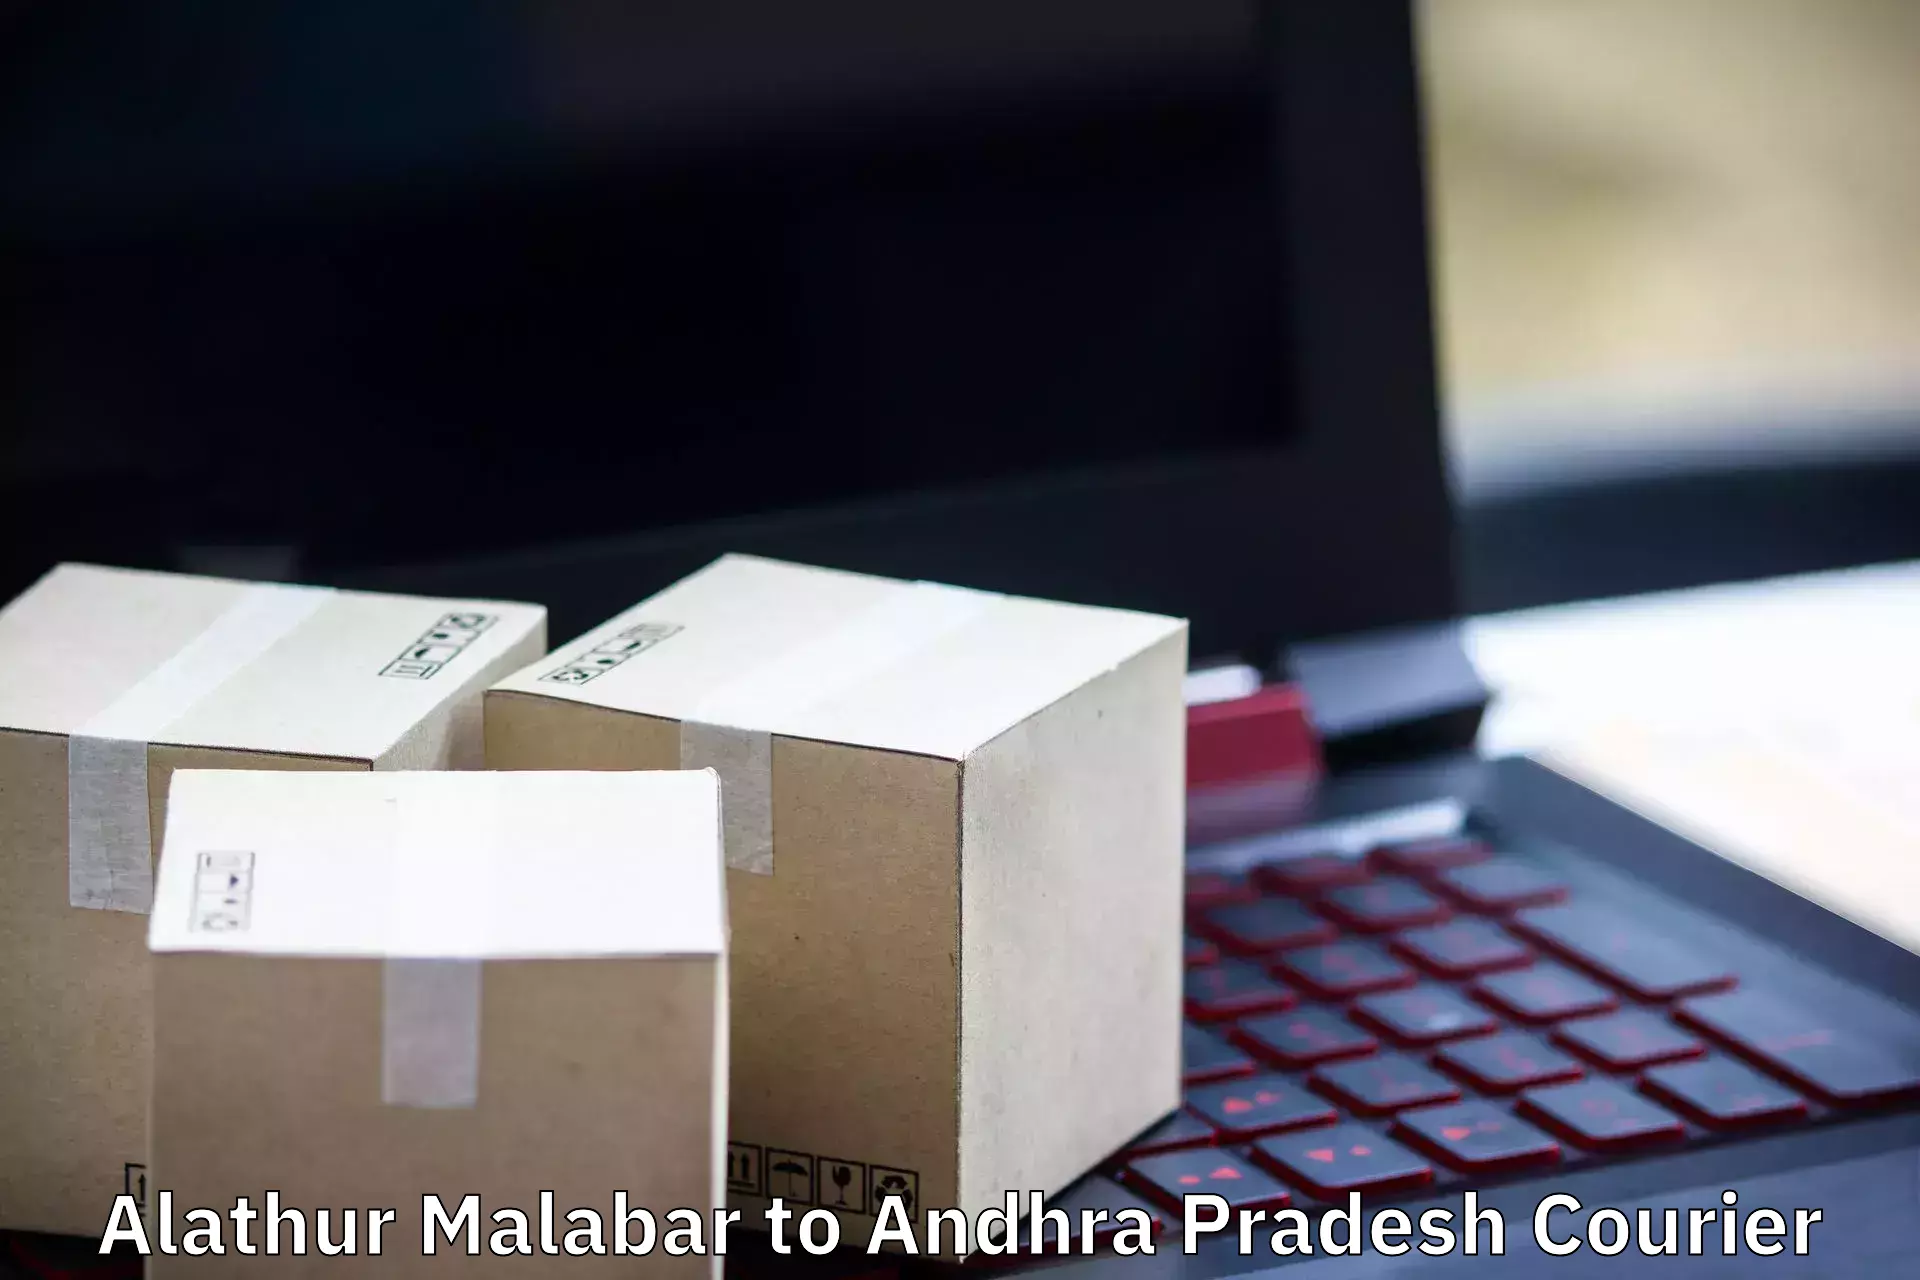 Specialized moving company Alathur Malabar to Gullapalli